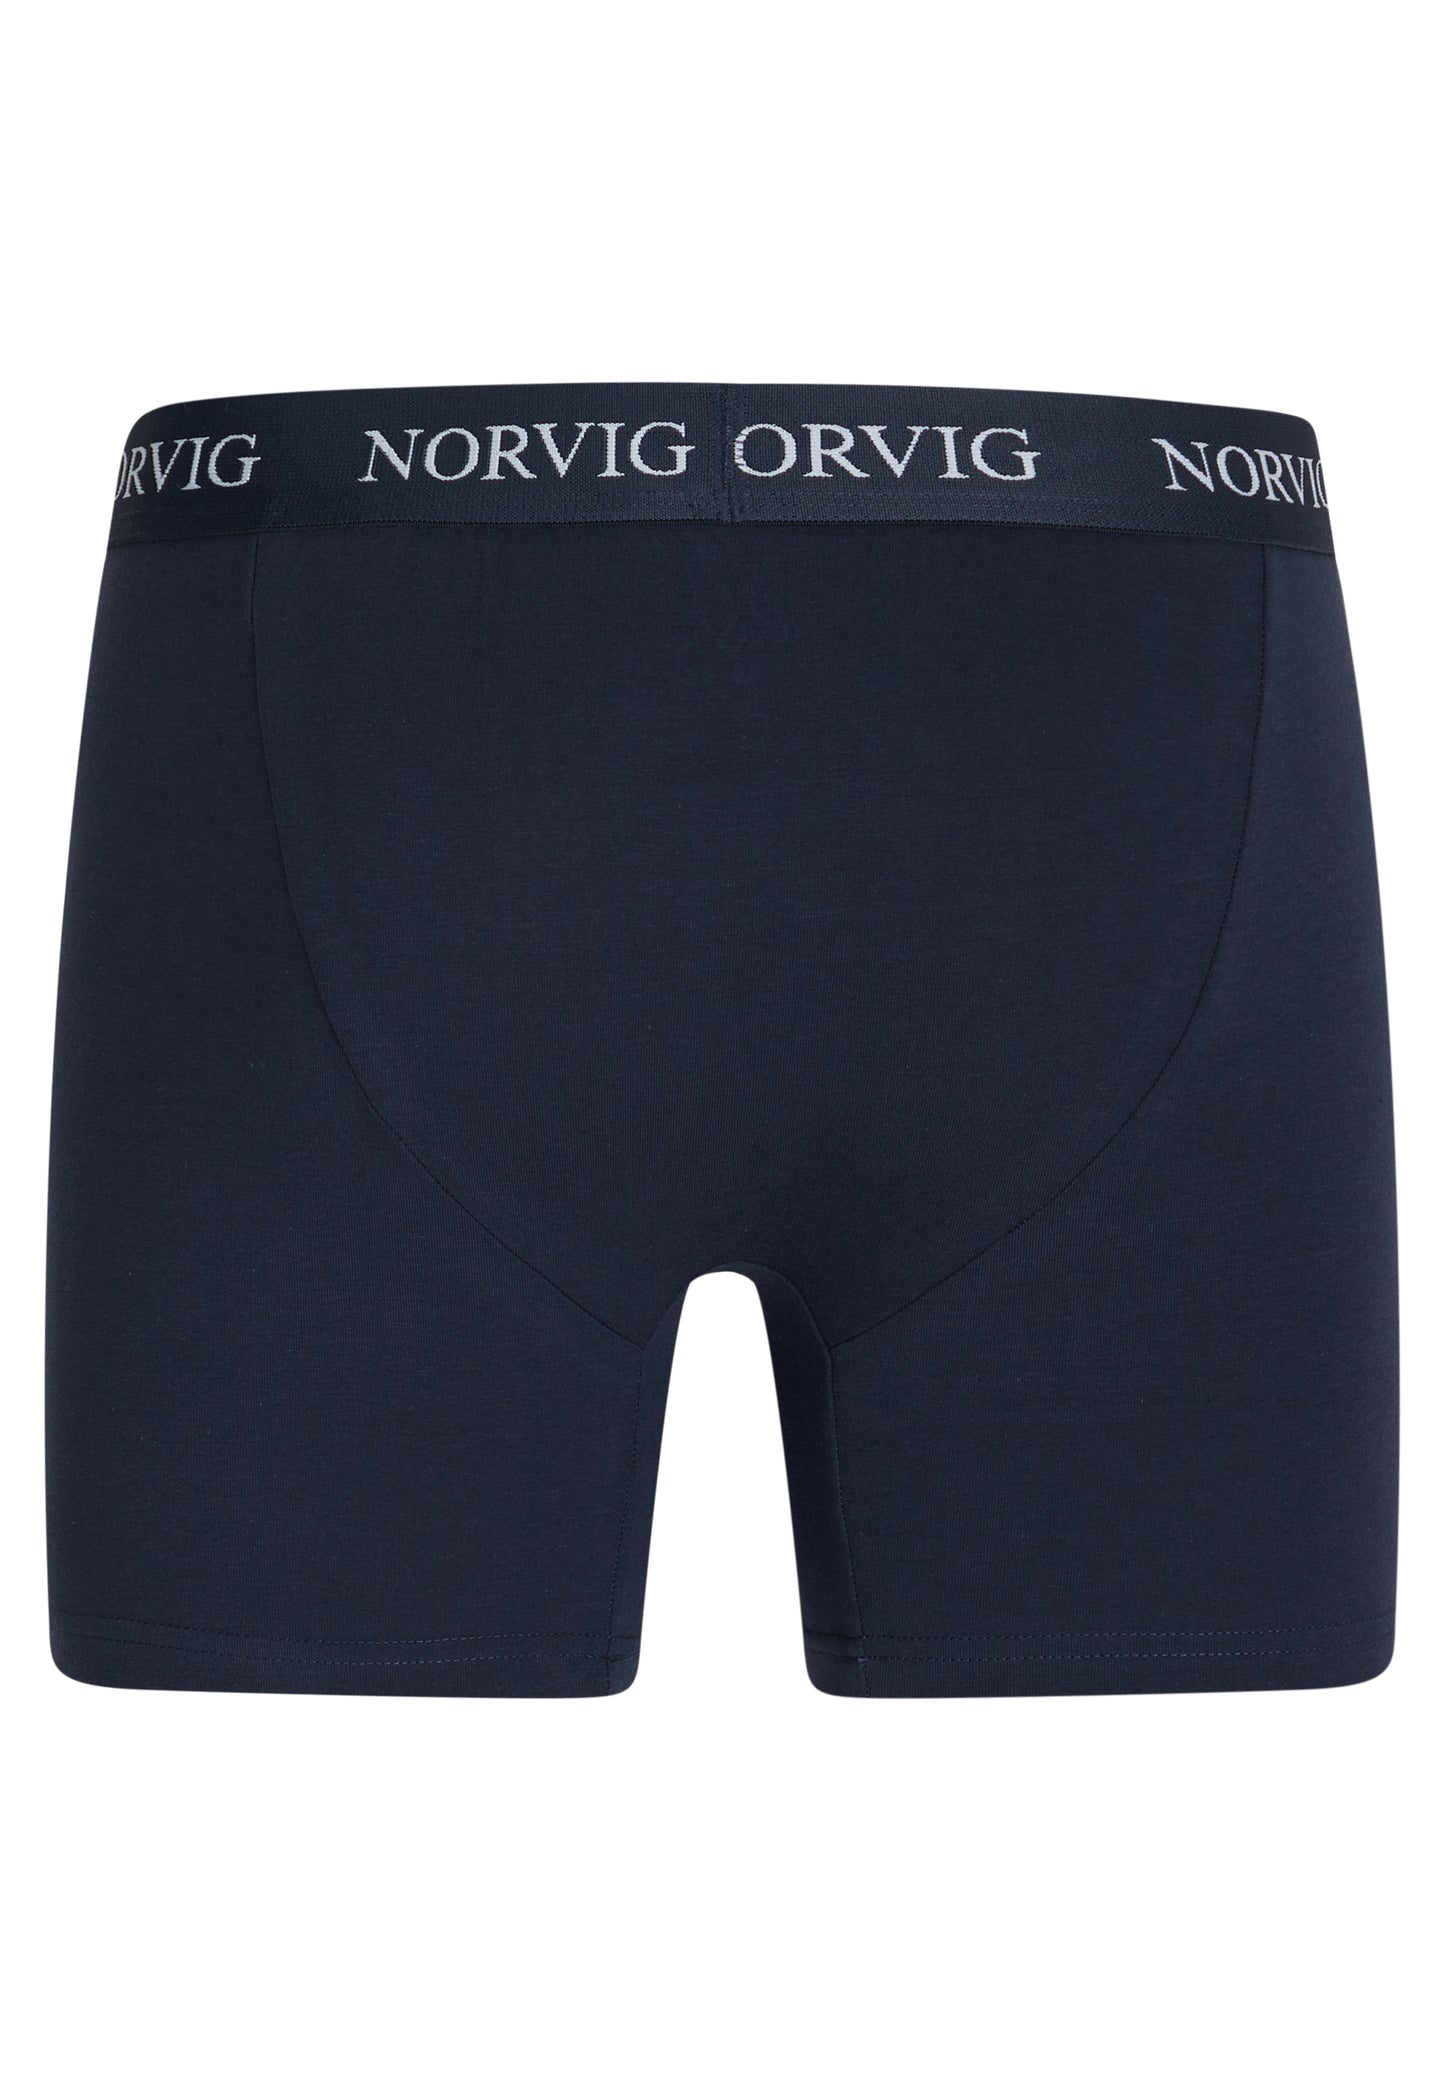 NORVIG 6-pak Tights navy